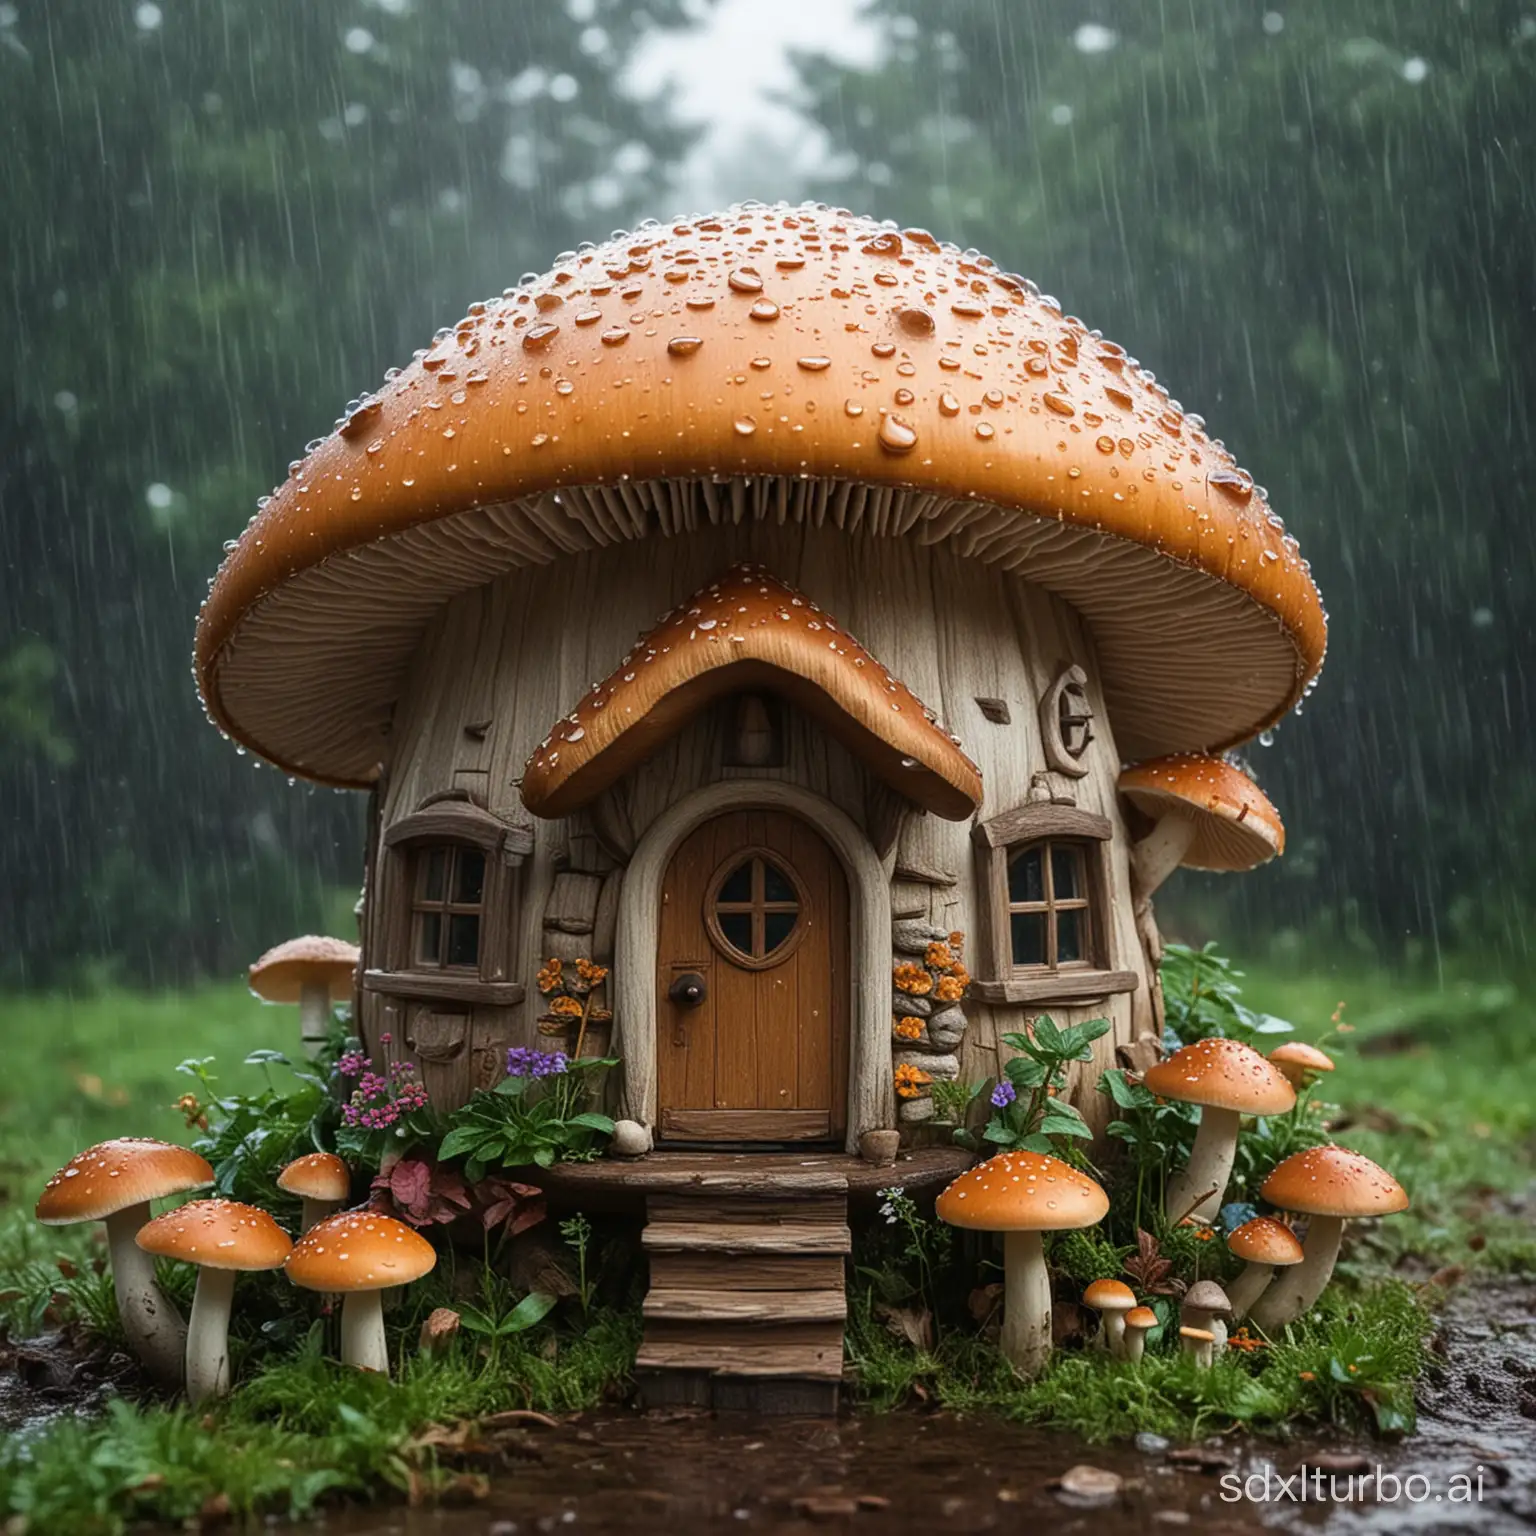 Enchanted-Mushroom-House-in-Rainy-Weather